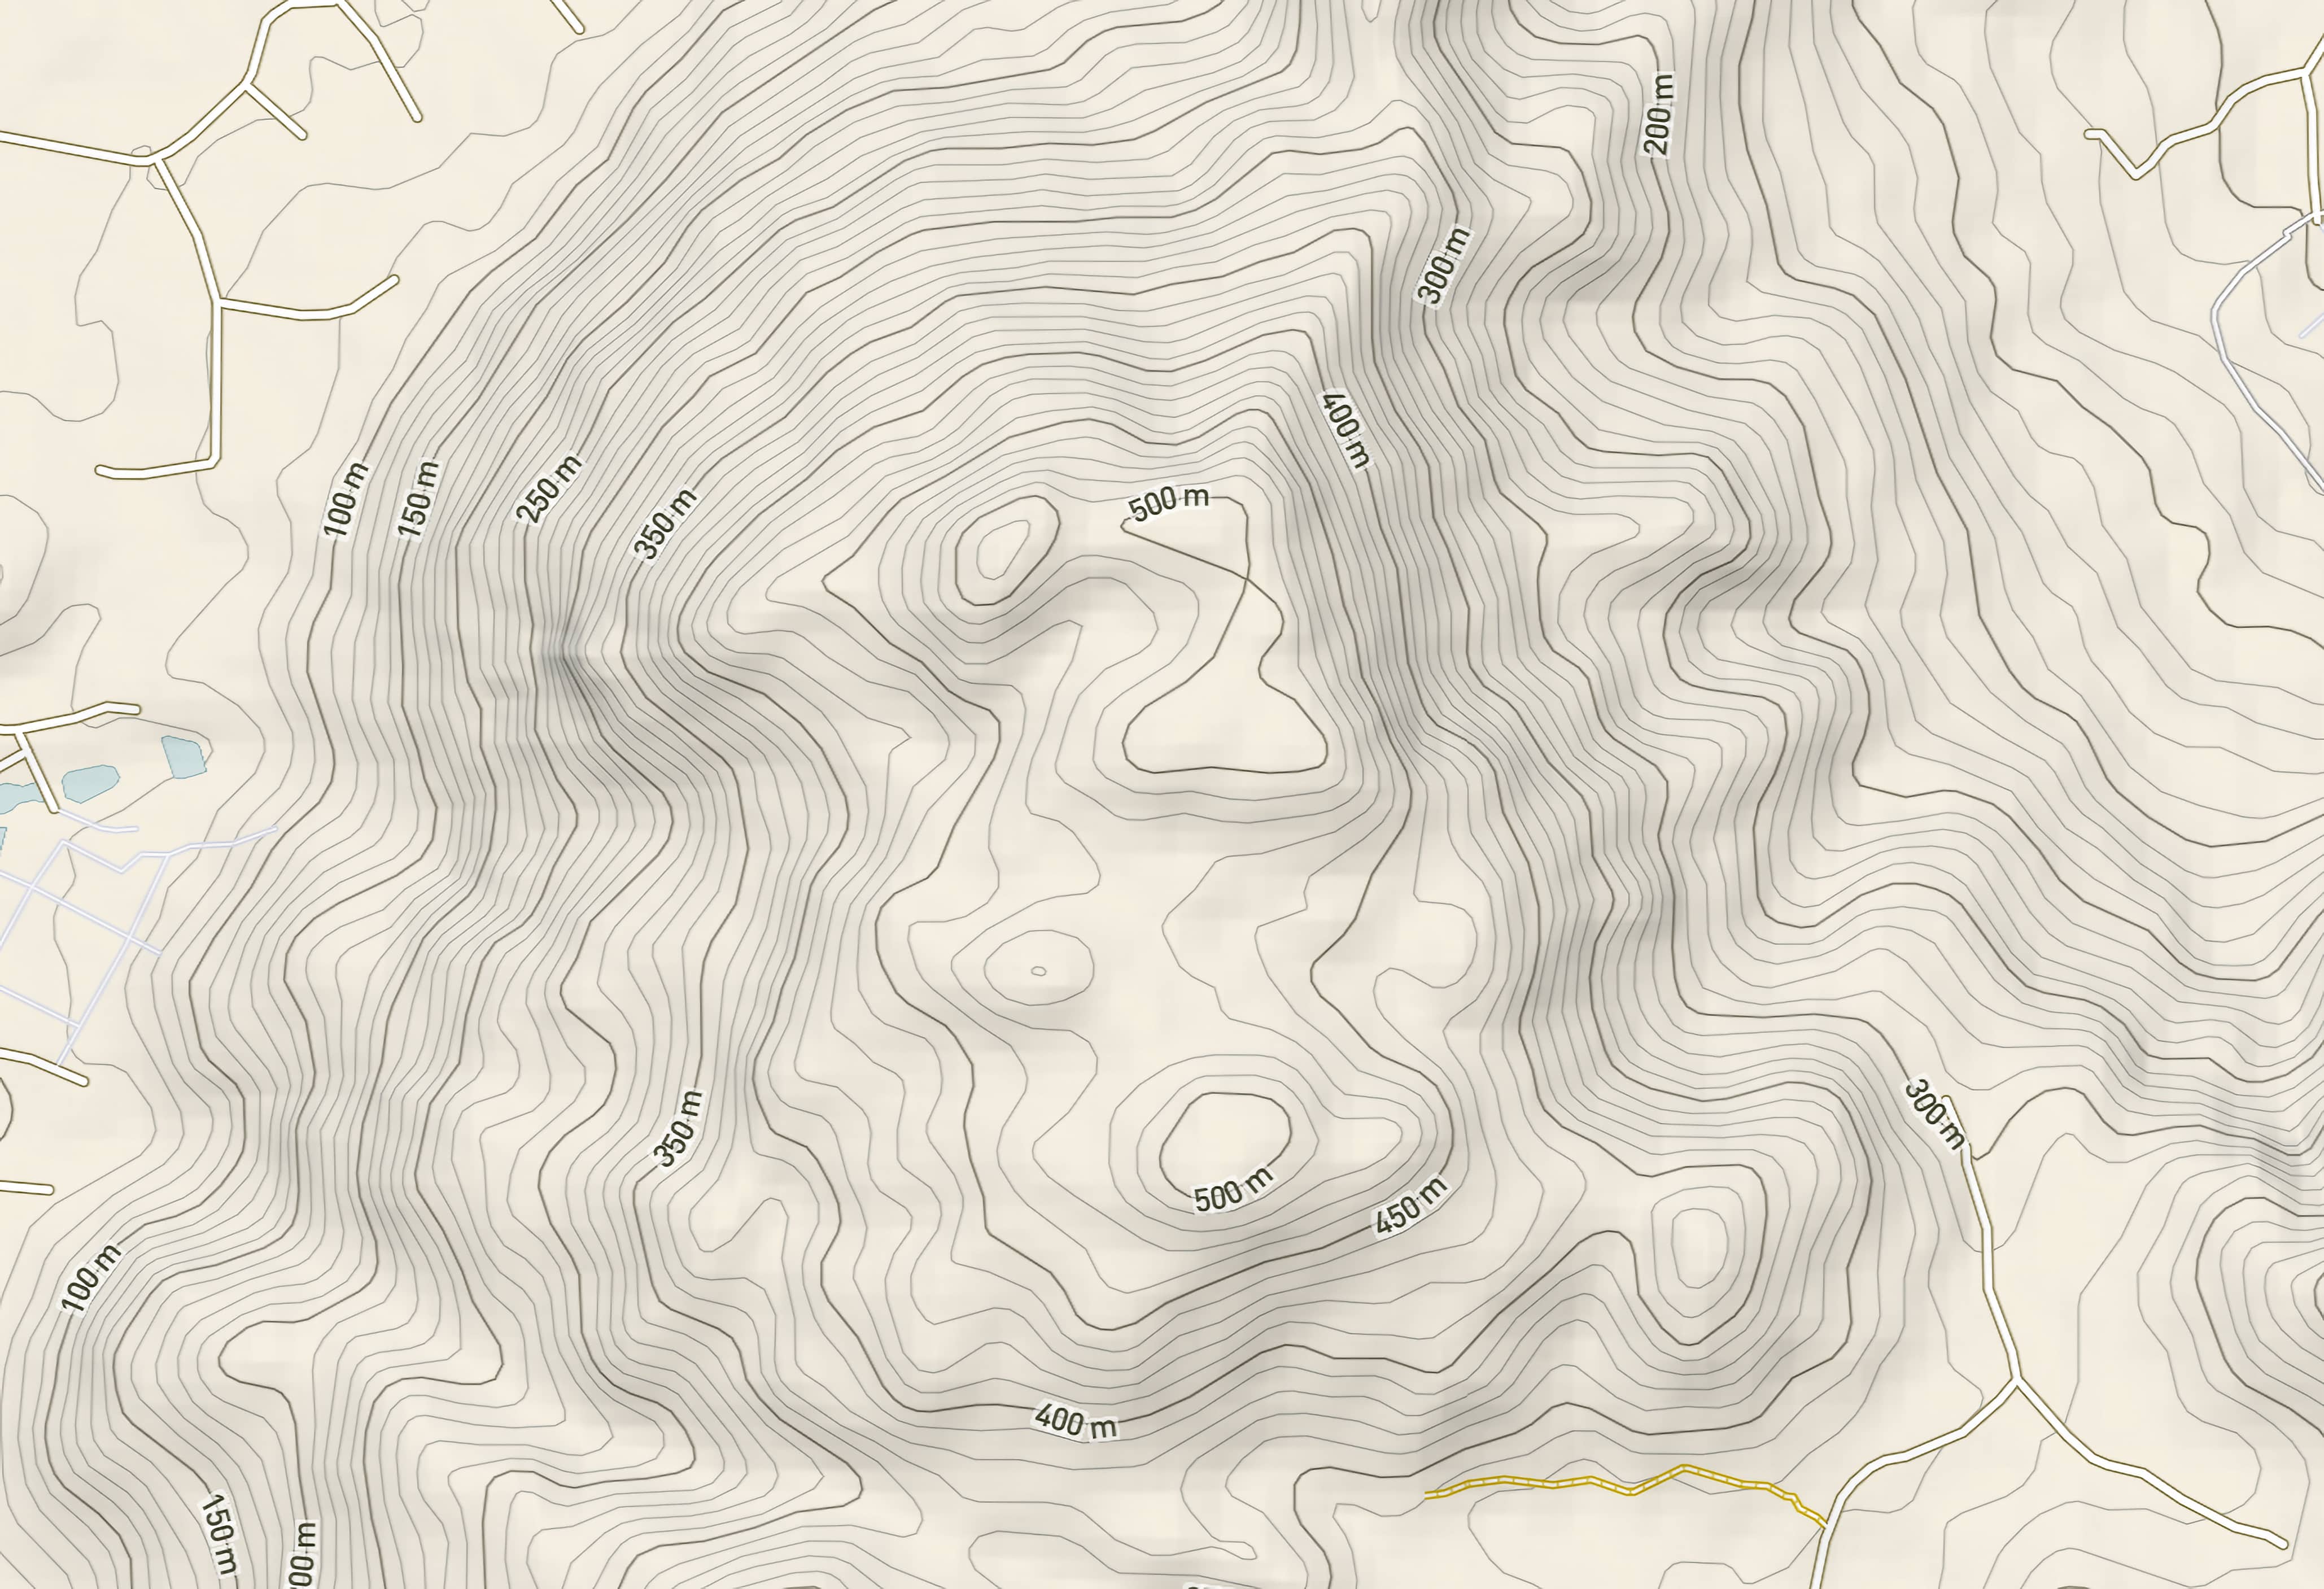 tinhte_topographic_map_ban_do_dia_hinh_9.jpg